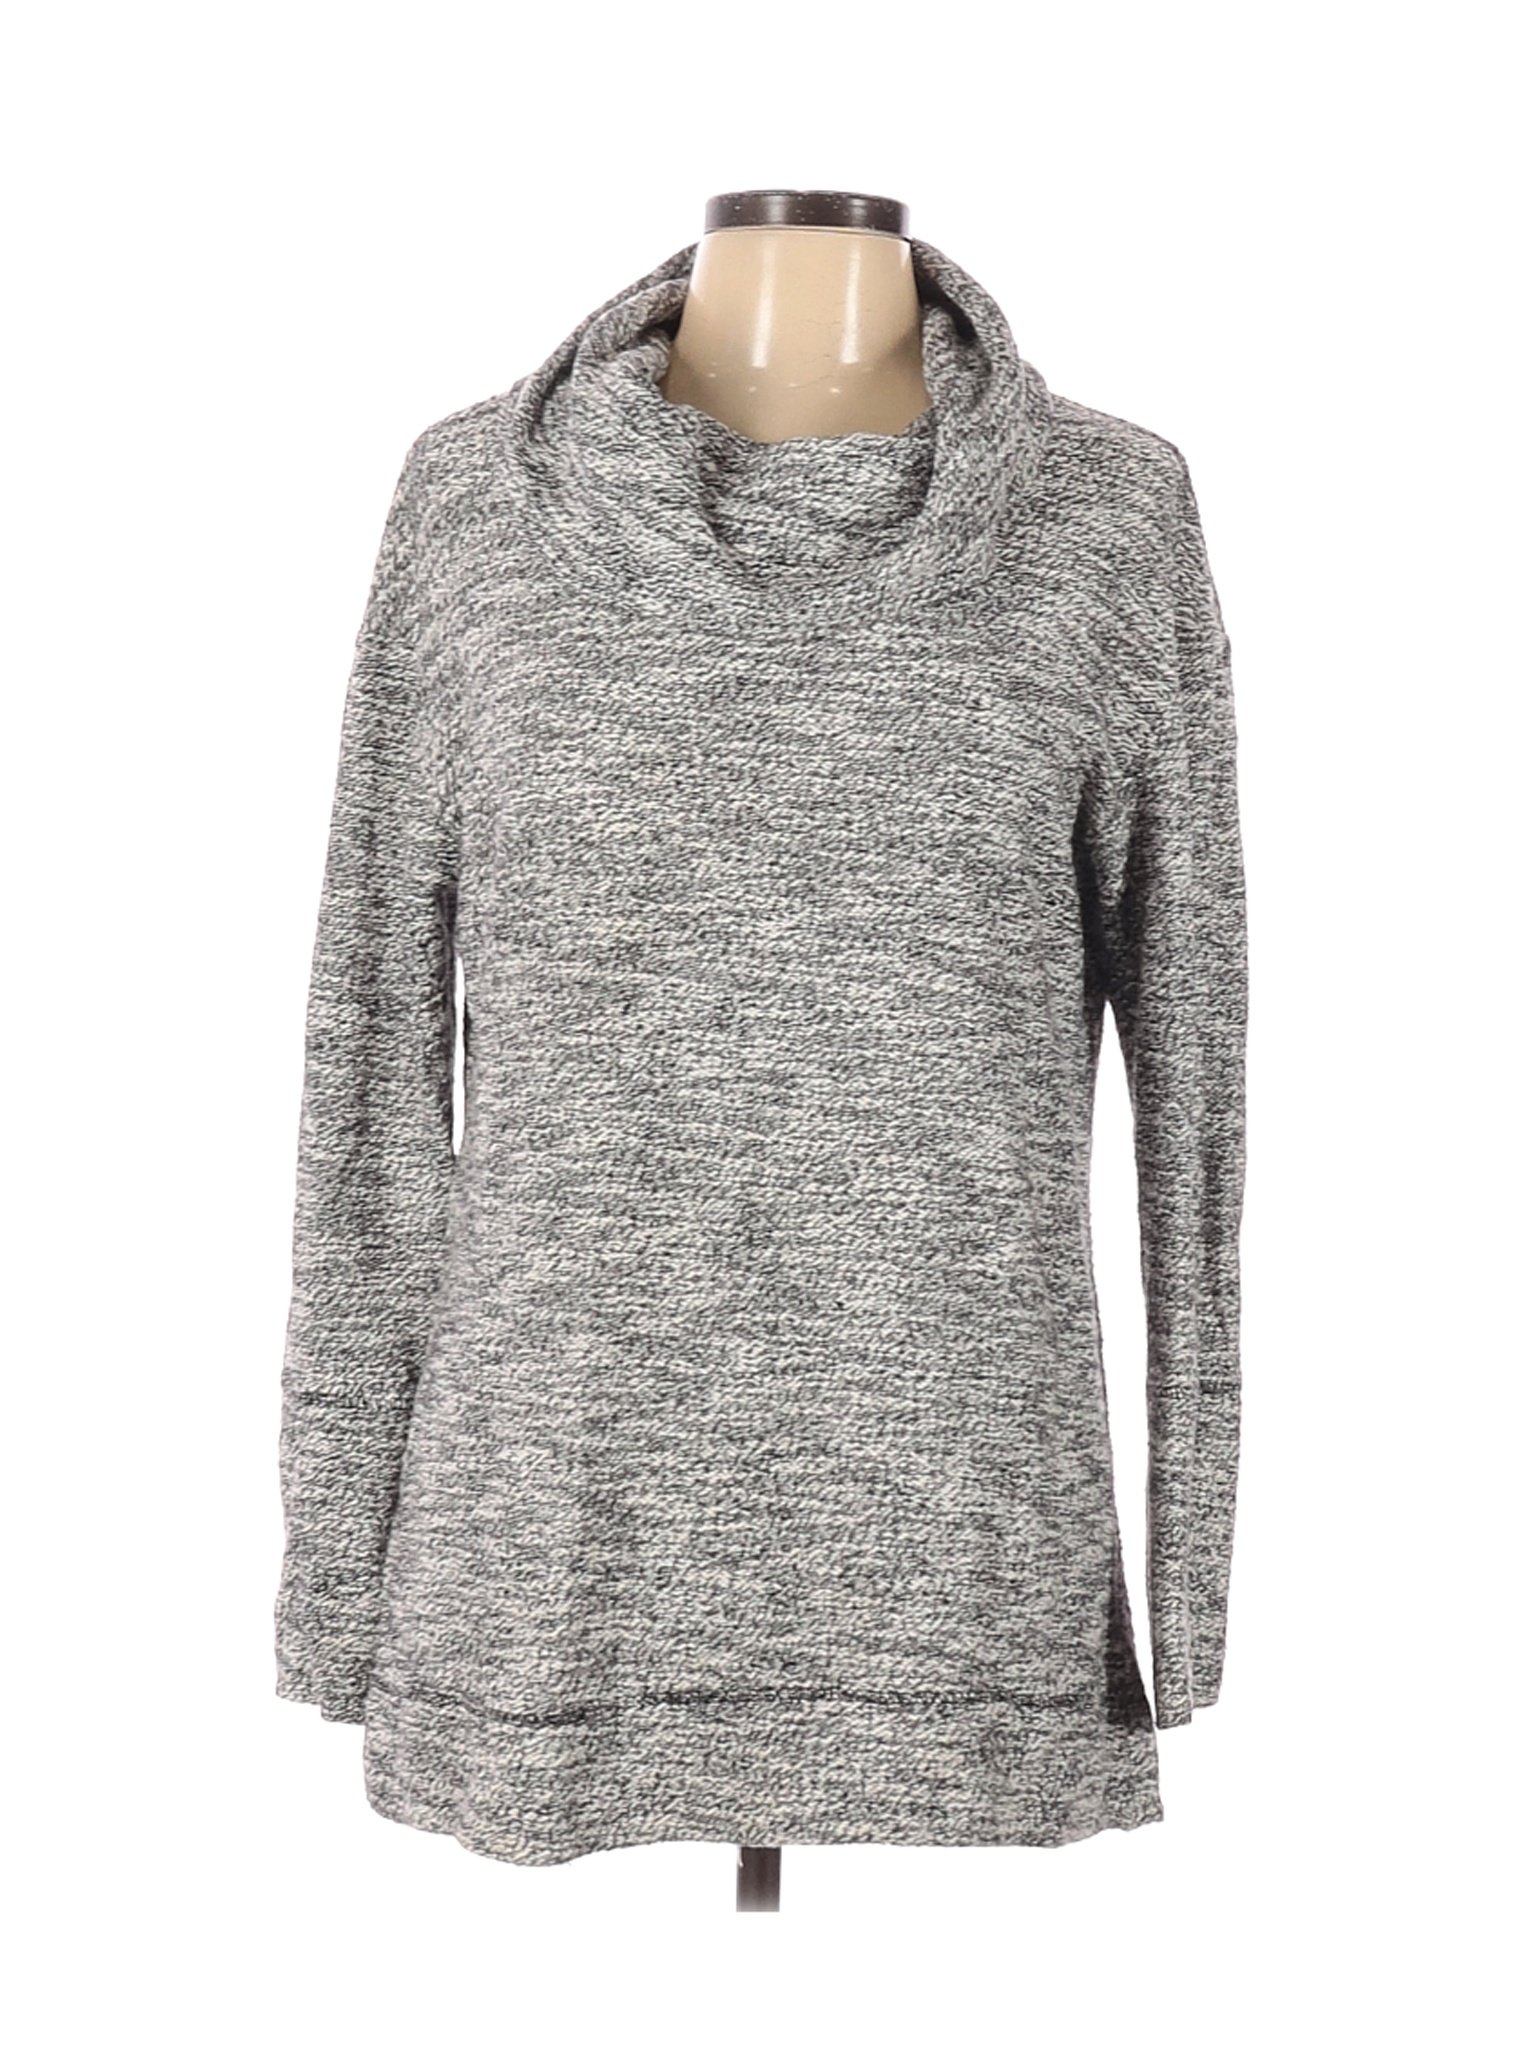 Merona Women Gray Pullover Sweater L | eBay